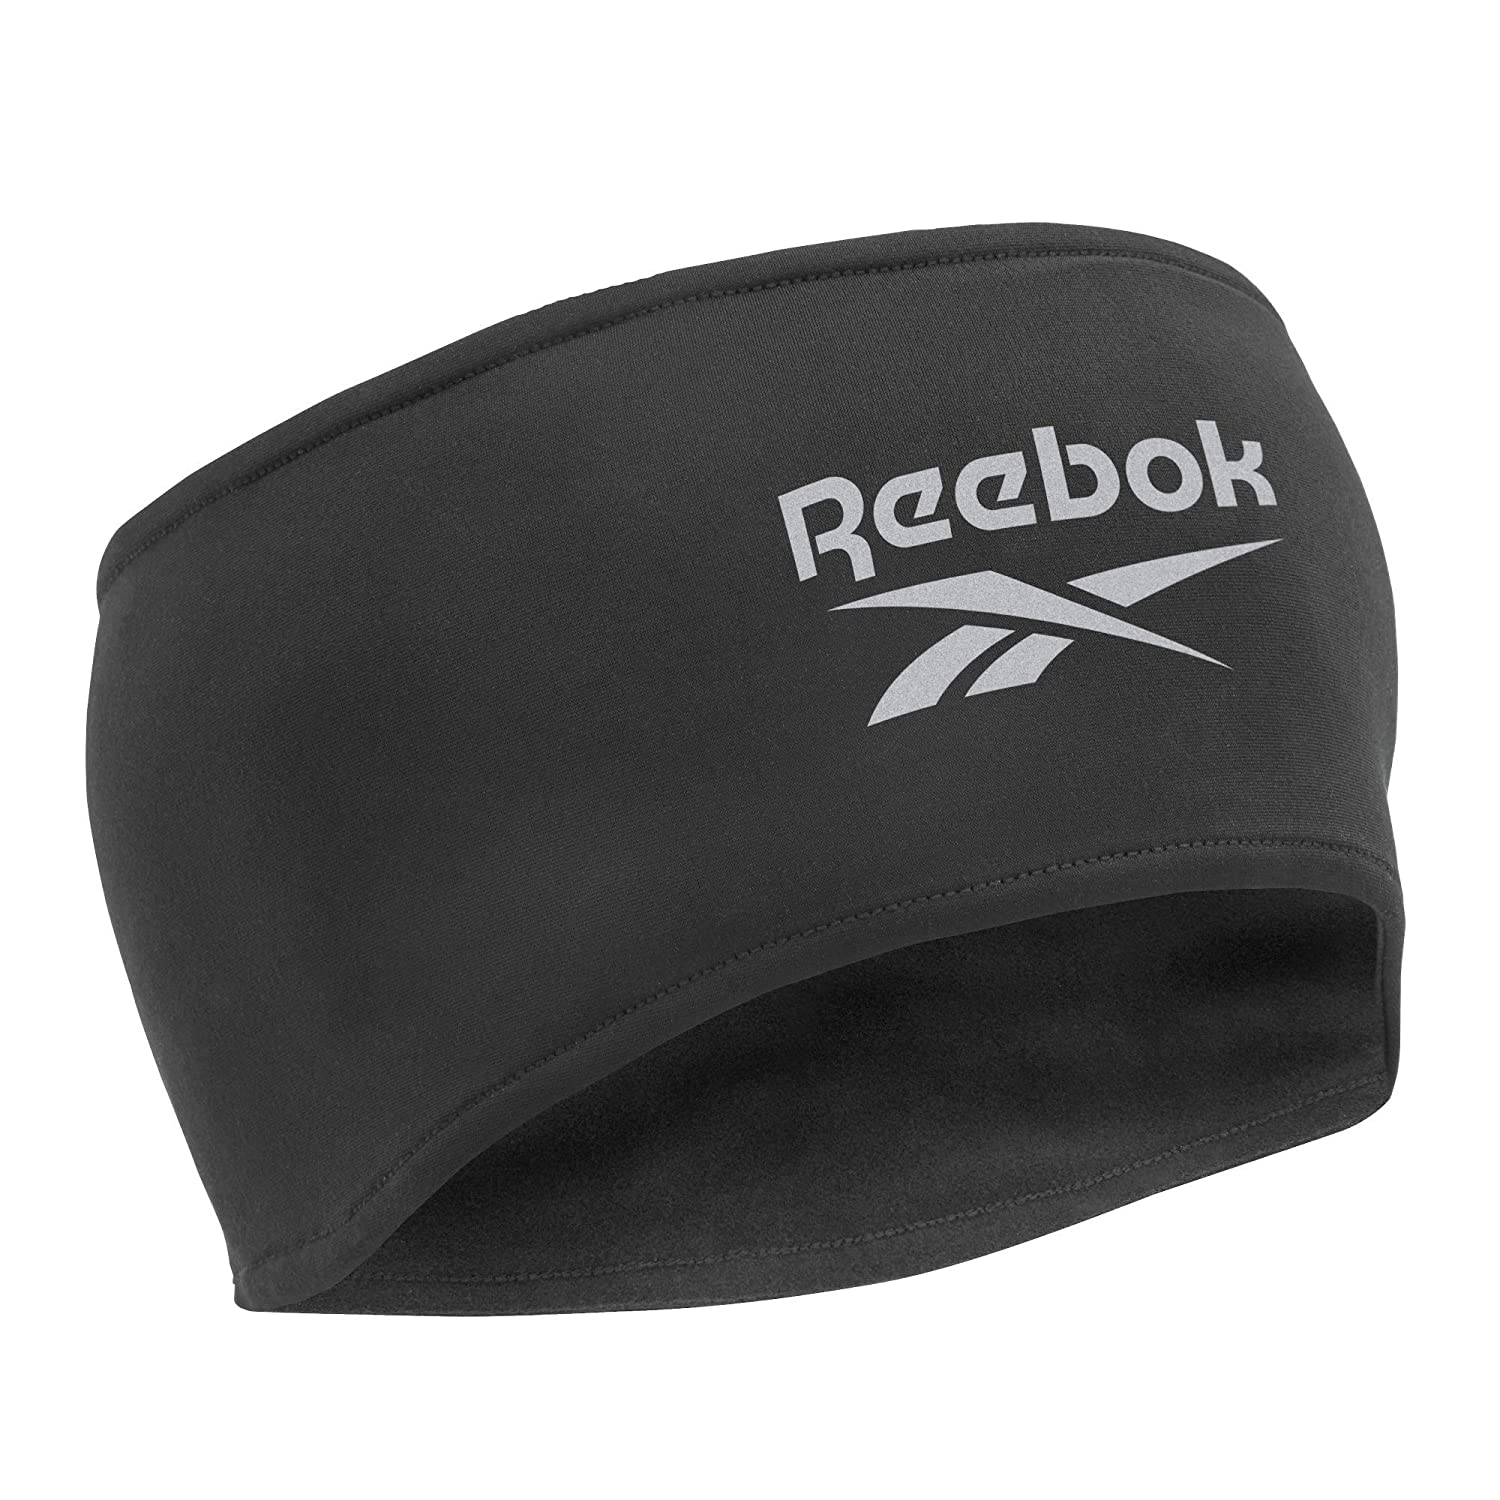 Reebok RRAC-10126 Running Headband - Black - Best Price online Prokicksports.com